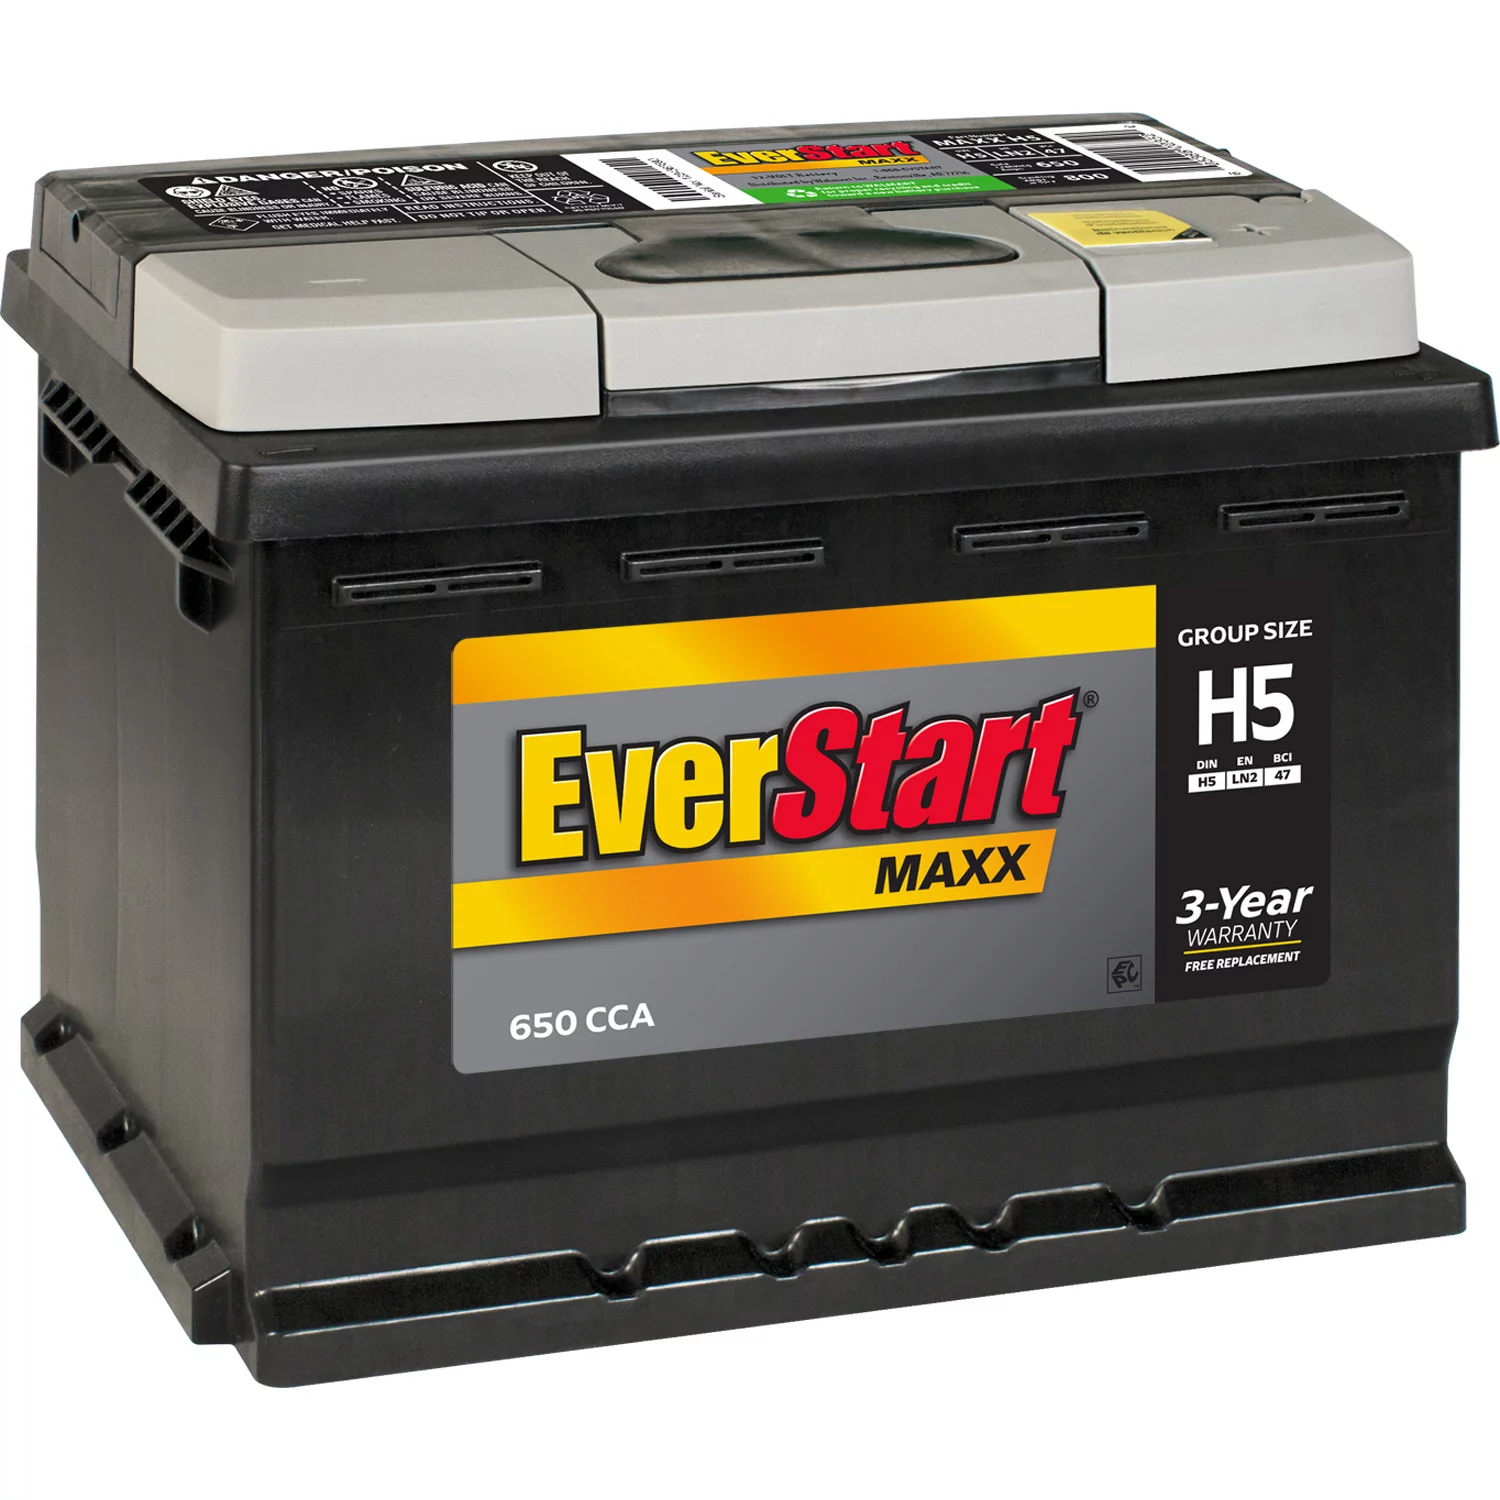 EverStart Maxx Lead Acid Automotive Battery, Group Size H5 12 Volt, 650 CCA